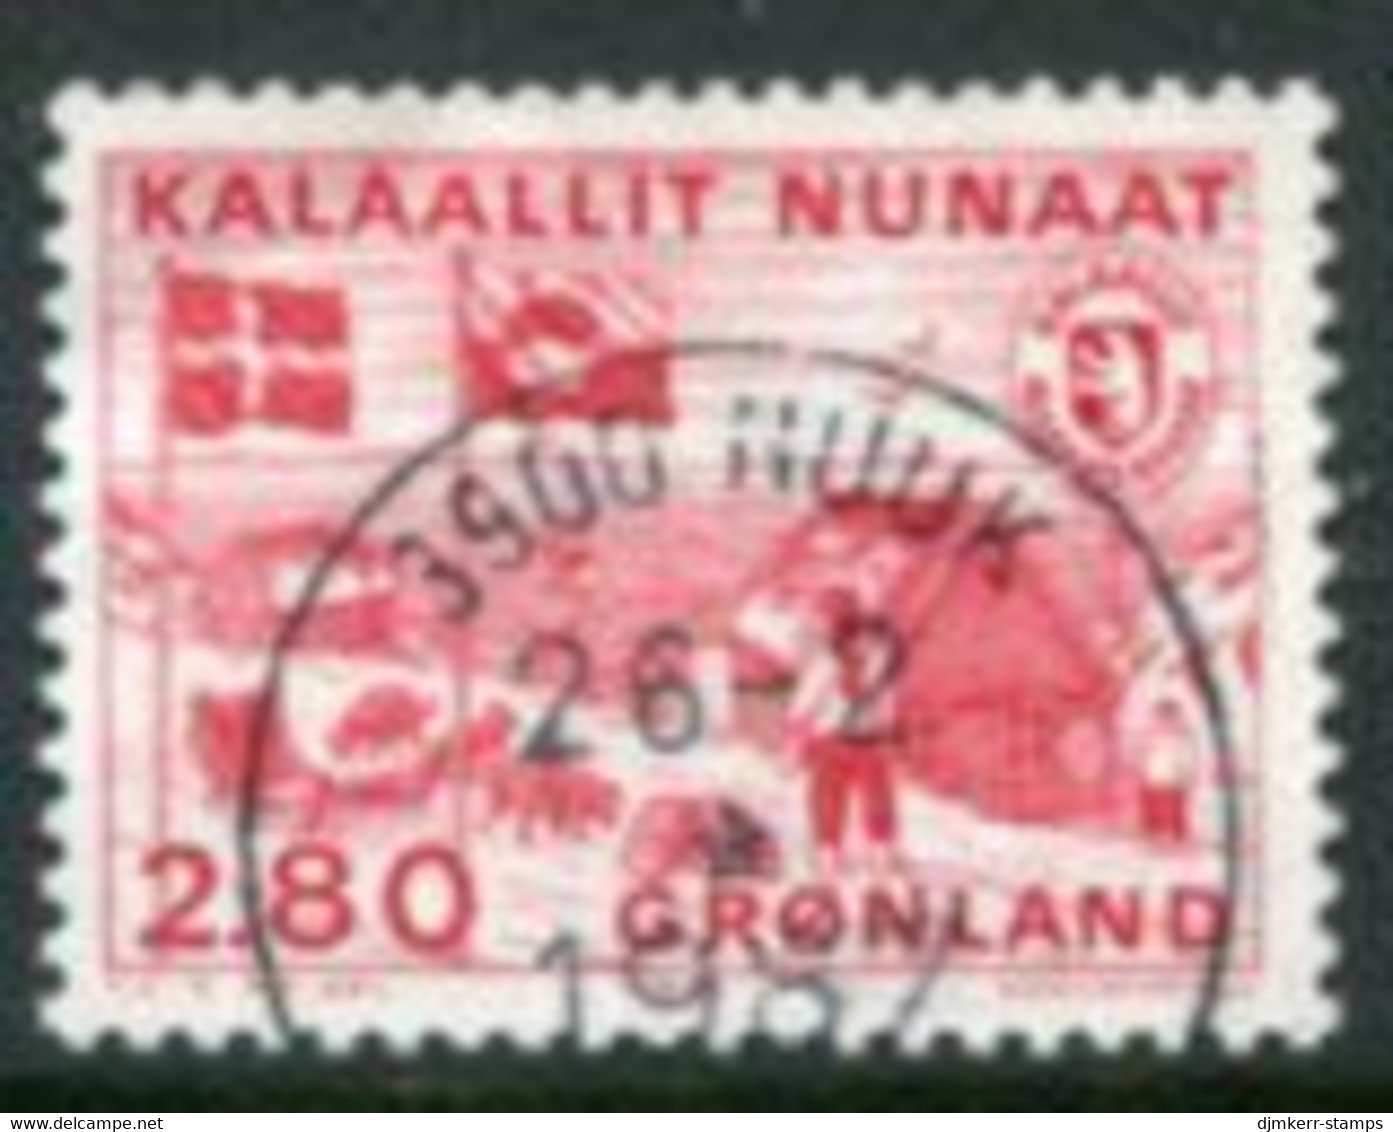 GREENLAND 1986 Postal Autonomy Used. Michel 163 - Gebruikt